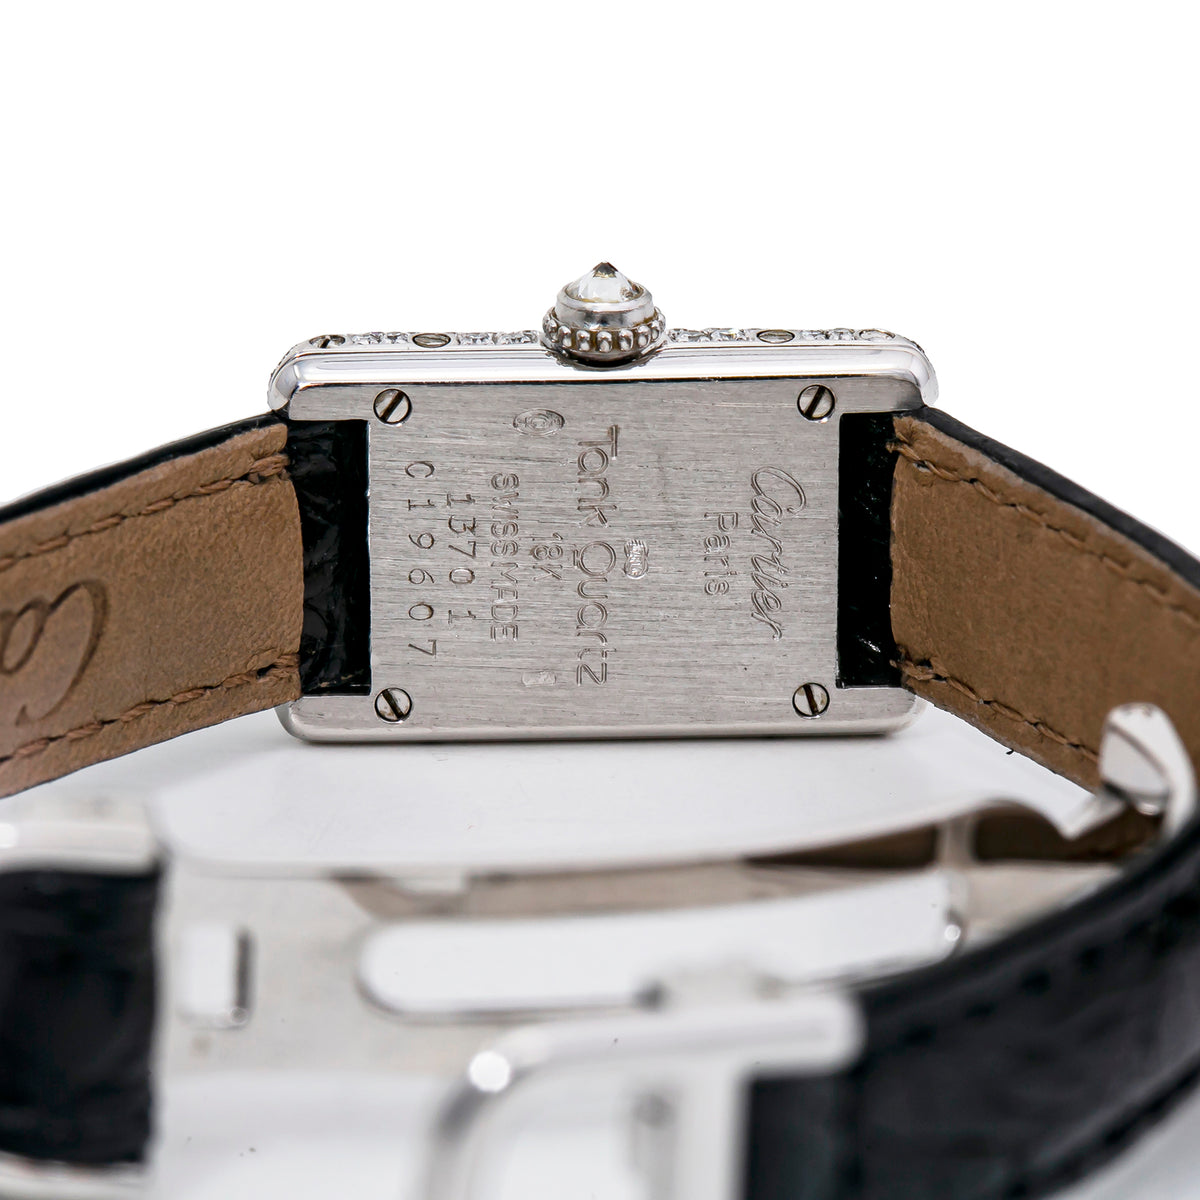 Cartier Tank Quartz 1370 1 Factory Diamond 18K White Gold Ladies Watch 16mm